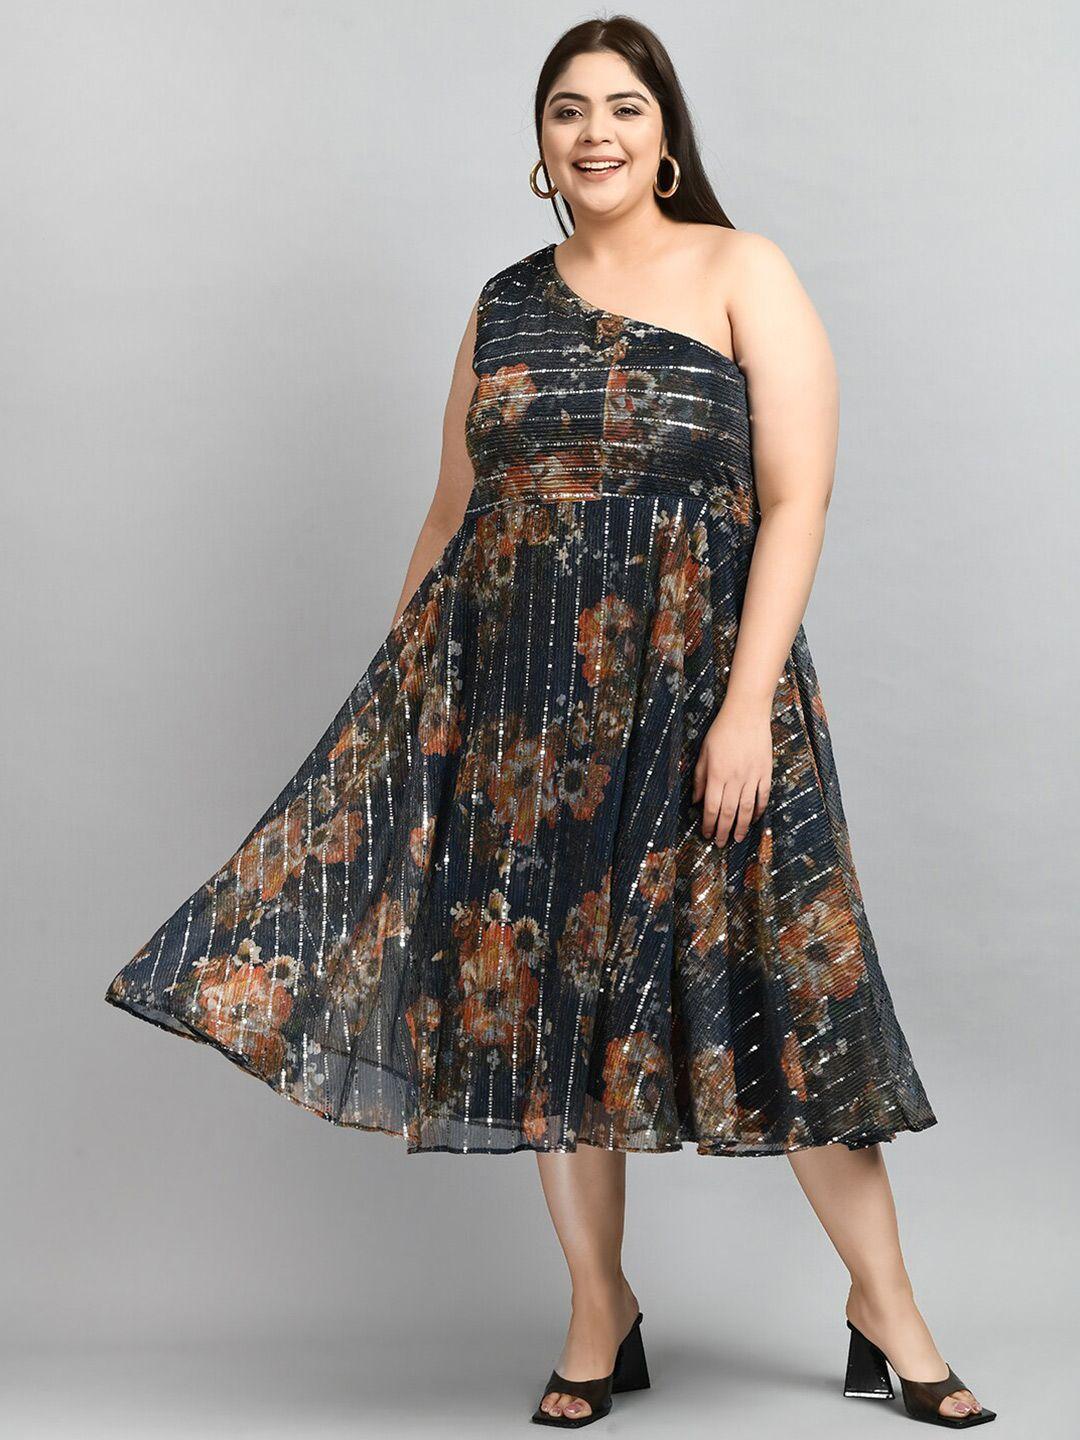 prettyplus by desinoor.com women plus size one shoulder floral printed maxi dress